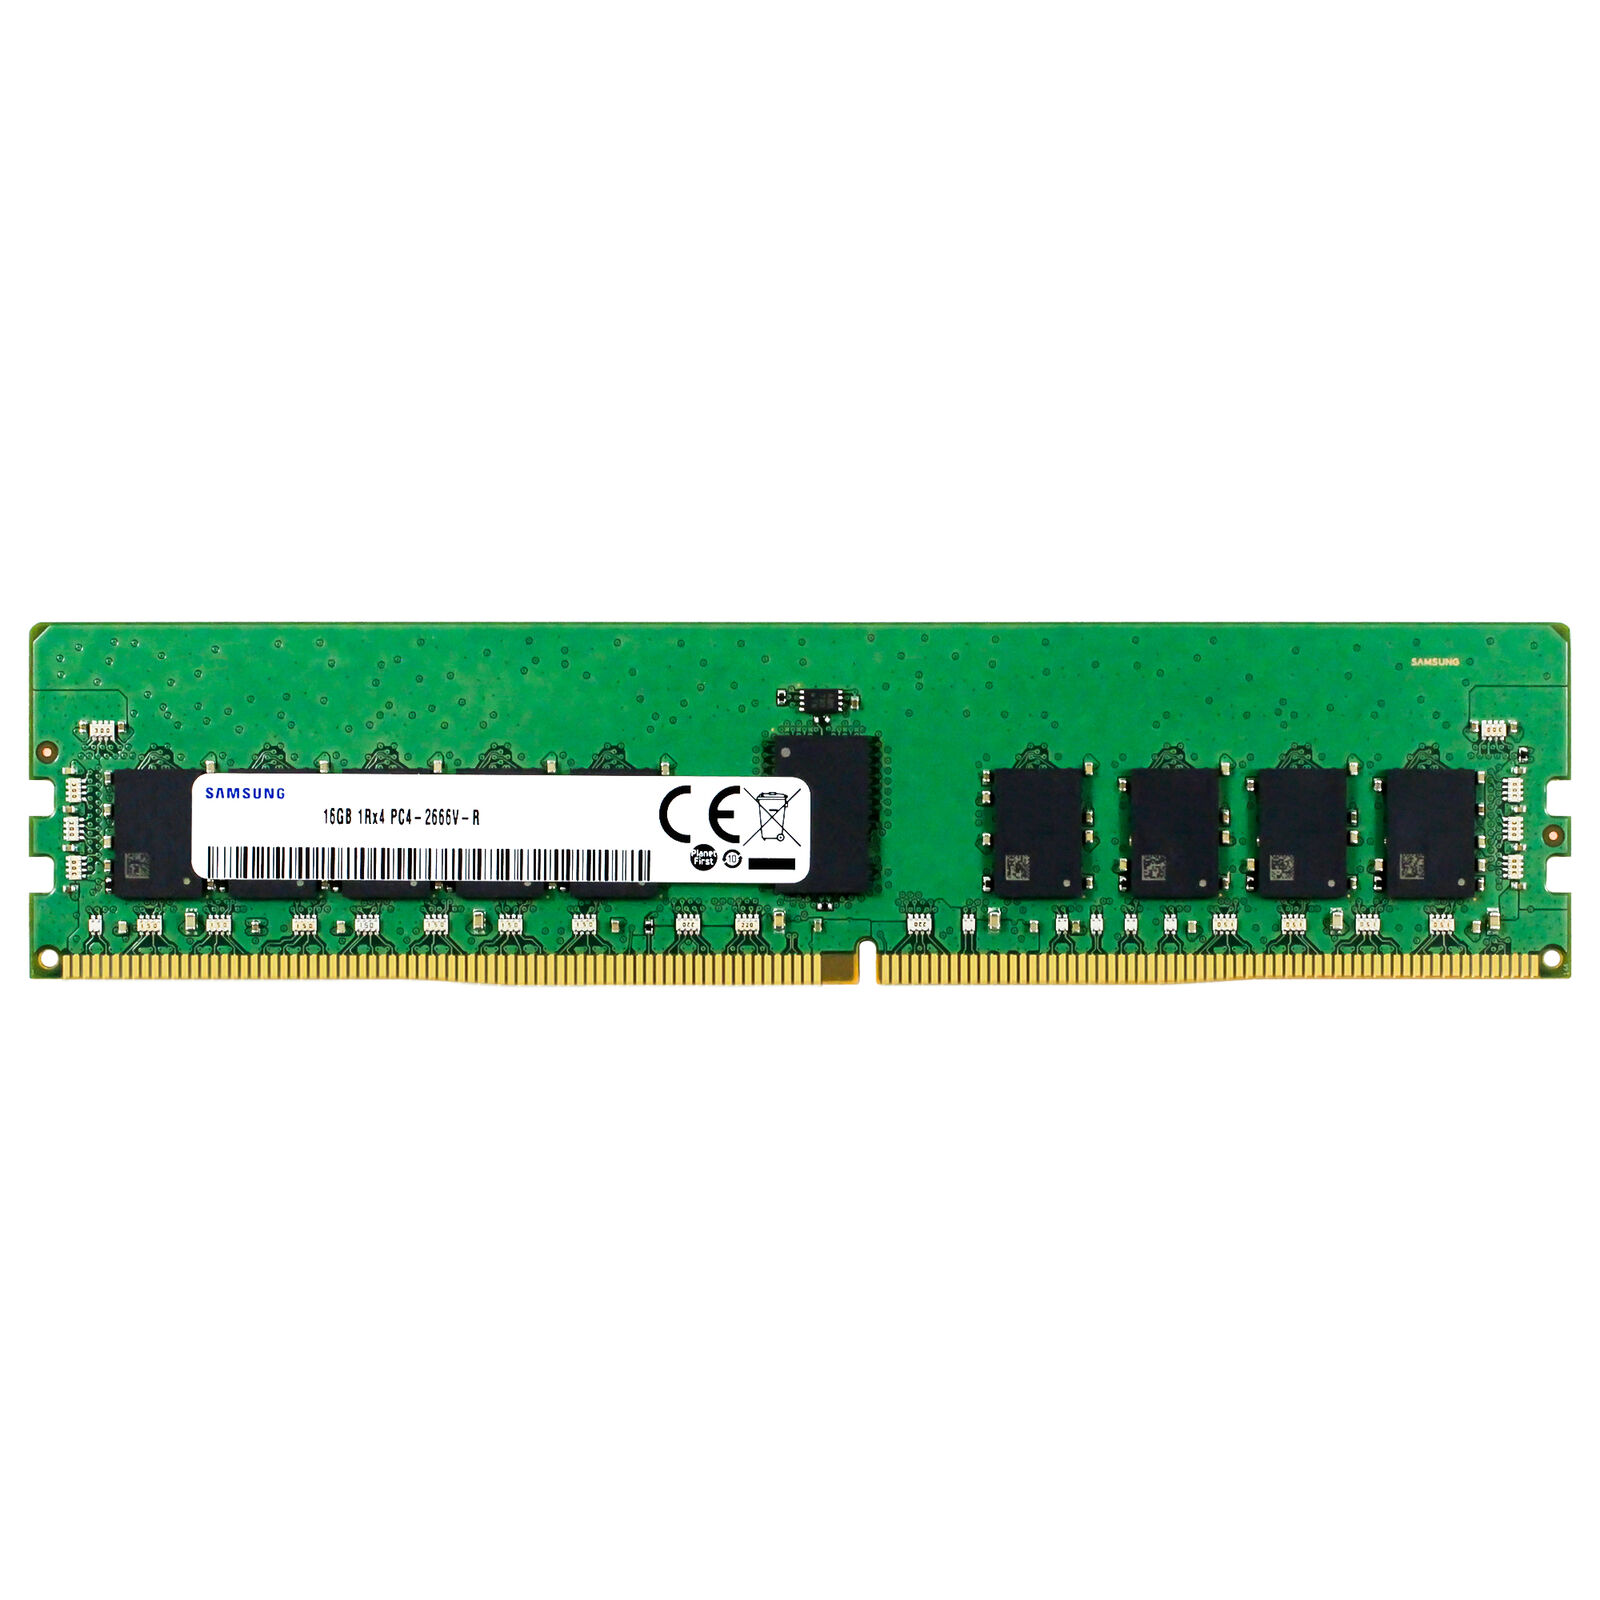 Samsung 16GB 1Rx4 PC4-2666 RDIMM DDR4-21300 ECC REG Registered Server Memory RAM